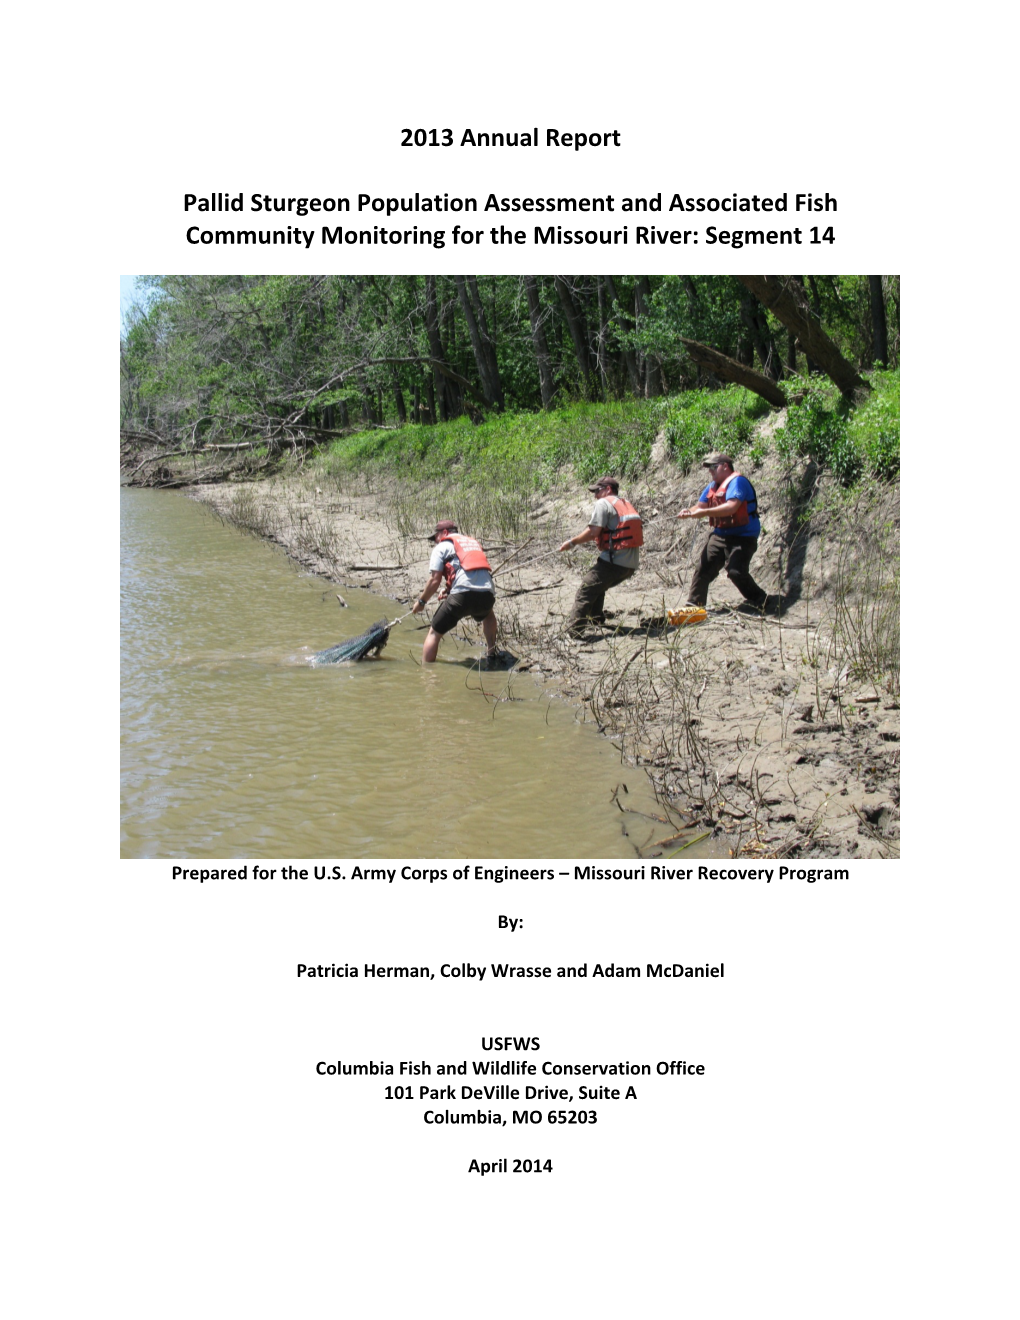 Pallid Sturgeon Population Assessment and Associated Fish Community Monitoring for the Missouri River: Segment 14